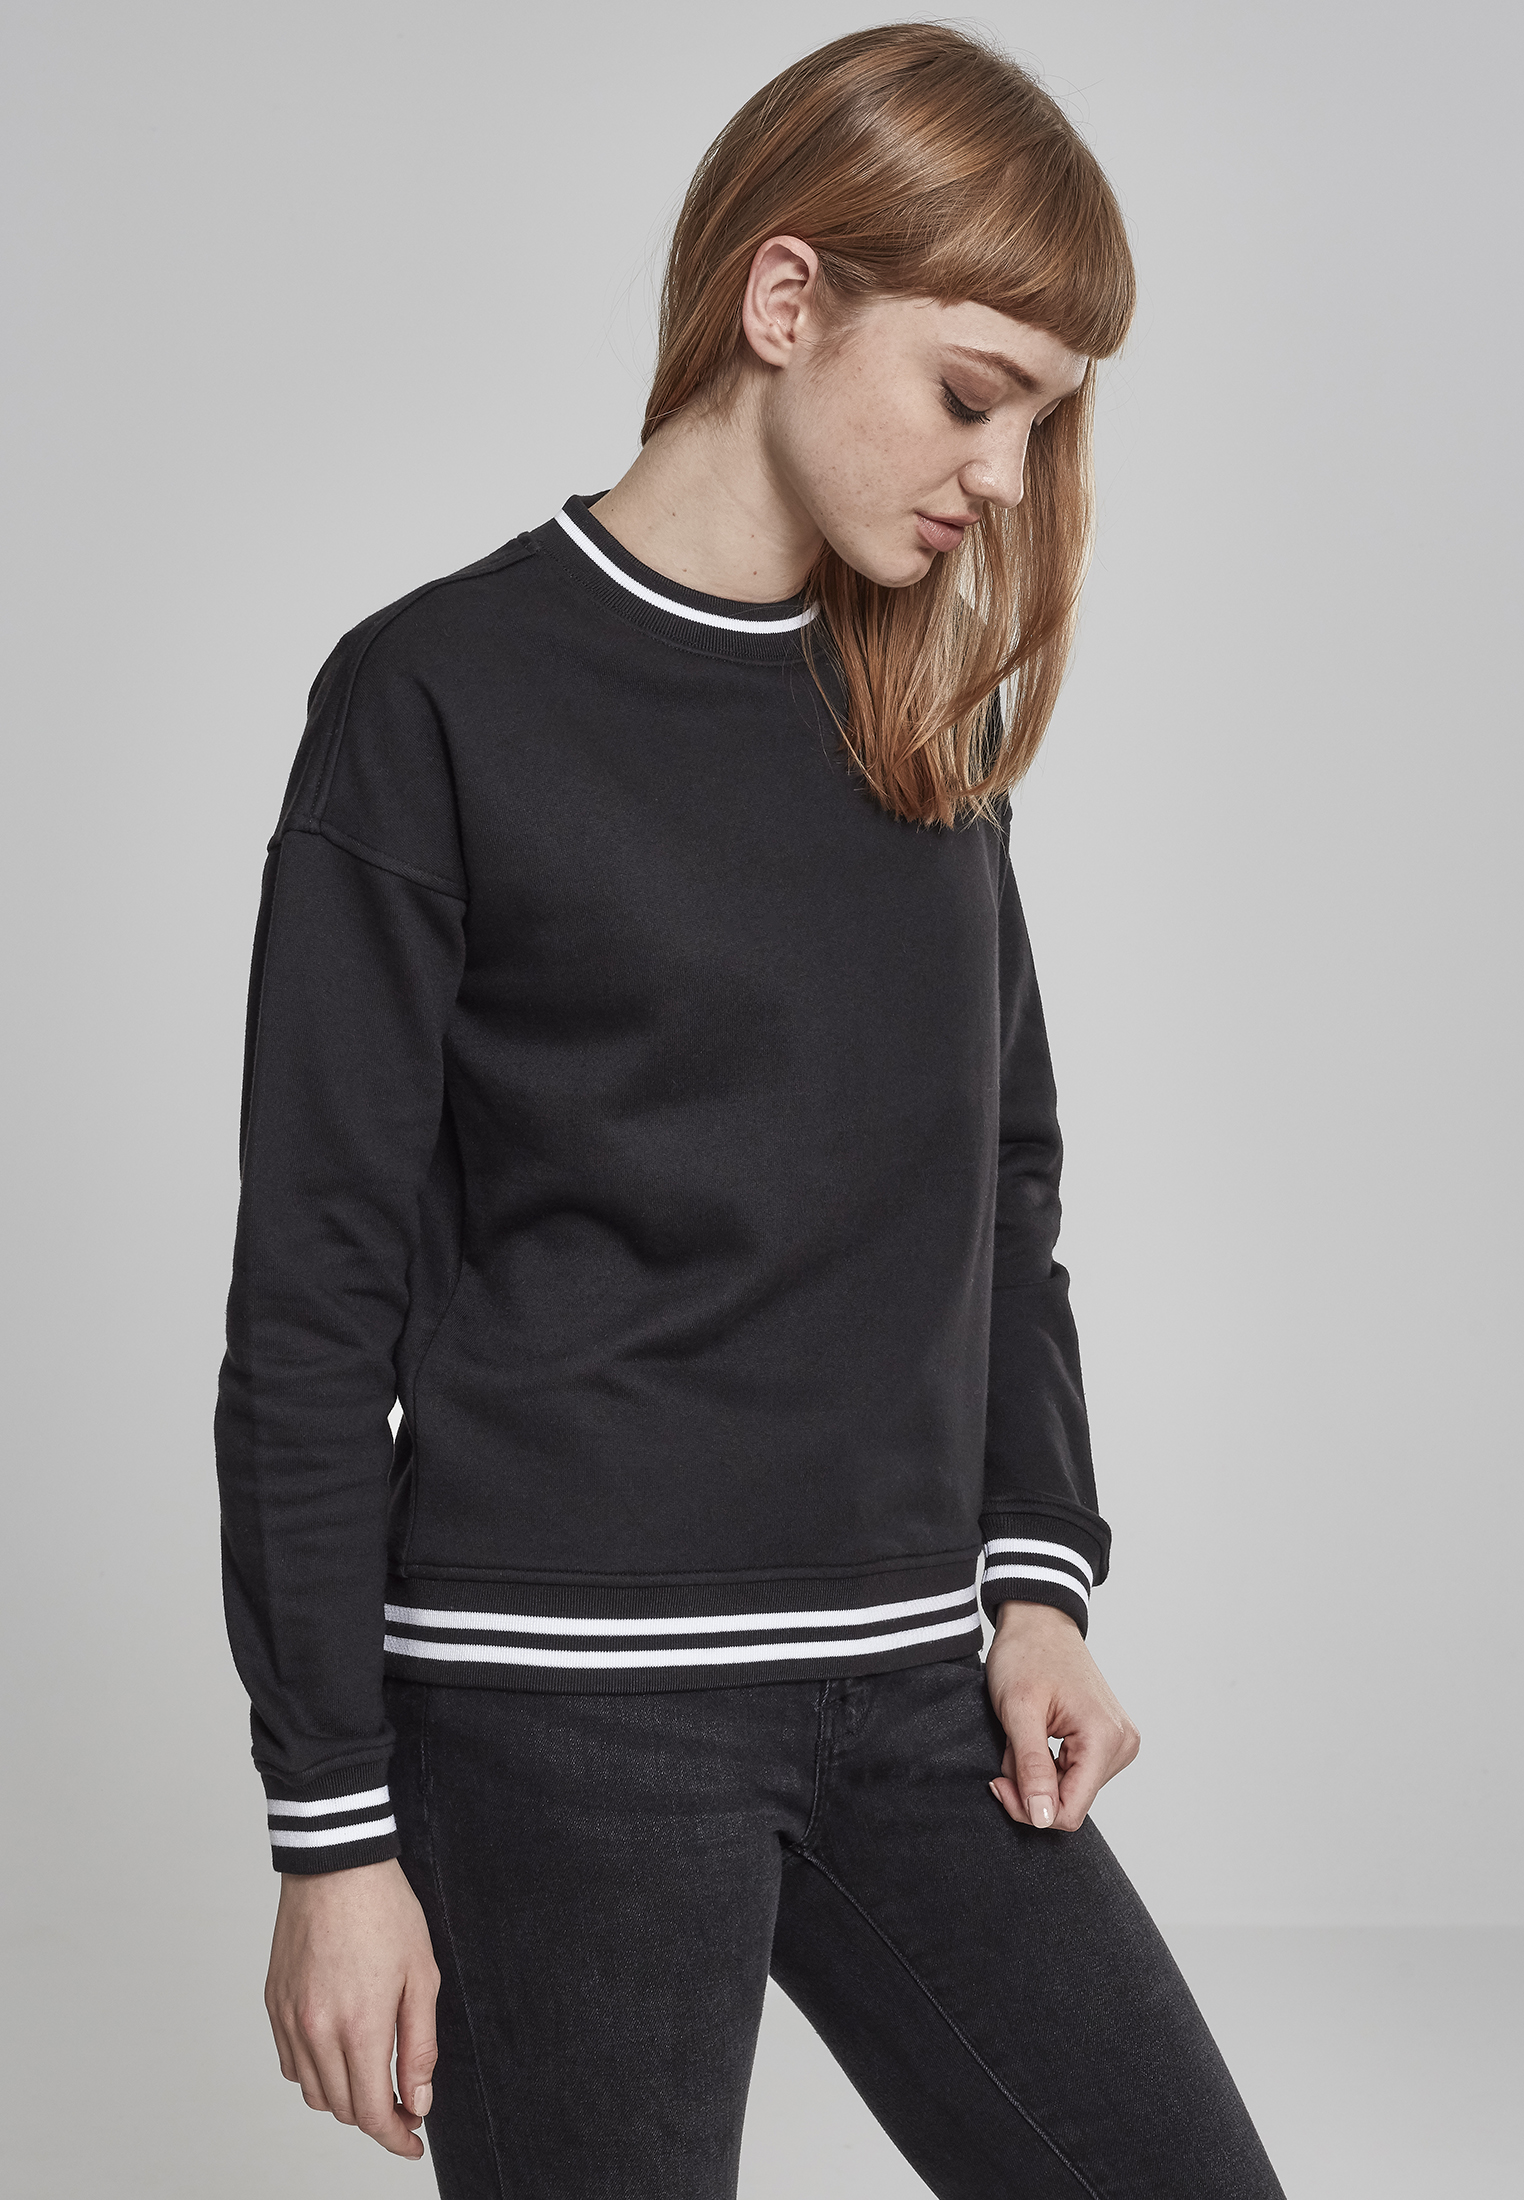 Urban Classics Damen Pullover Sweatshirt Longshirt Pulli Oversize Stripe Sweater